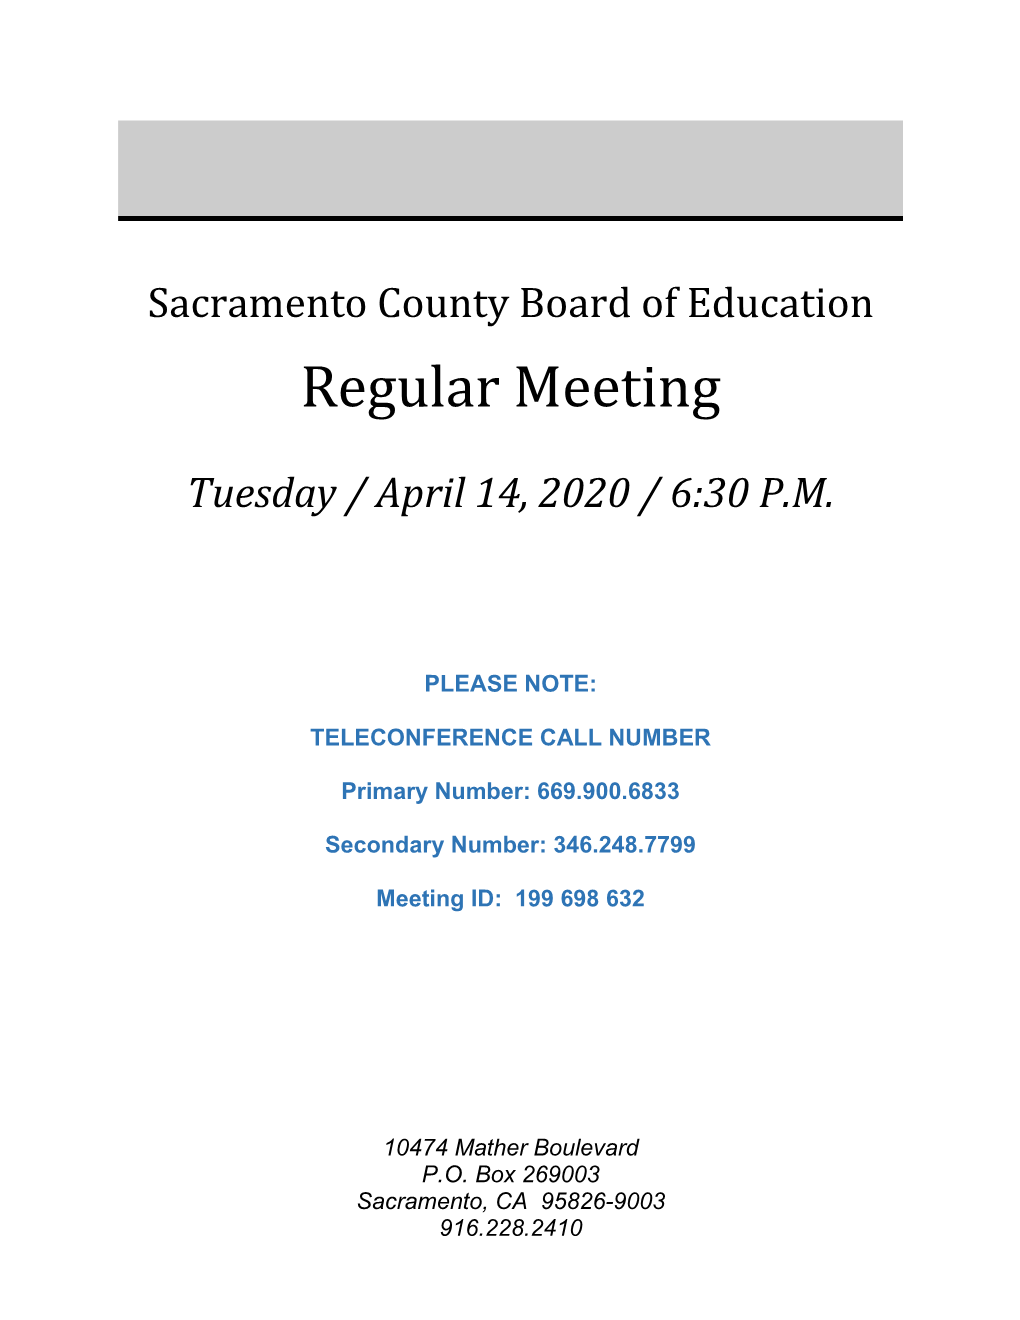 04/14/20 Sacramento County Board of Education Full Packet